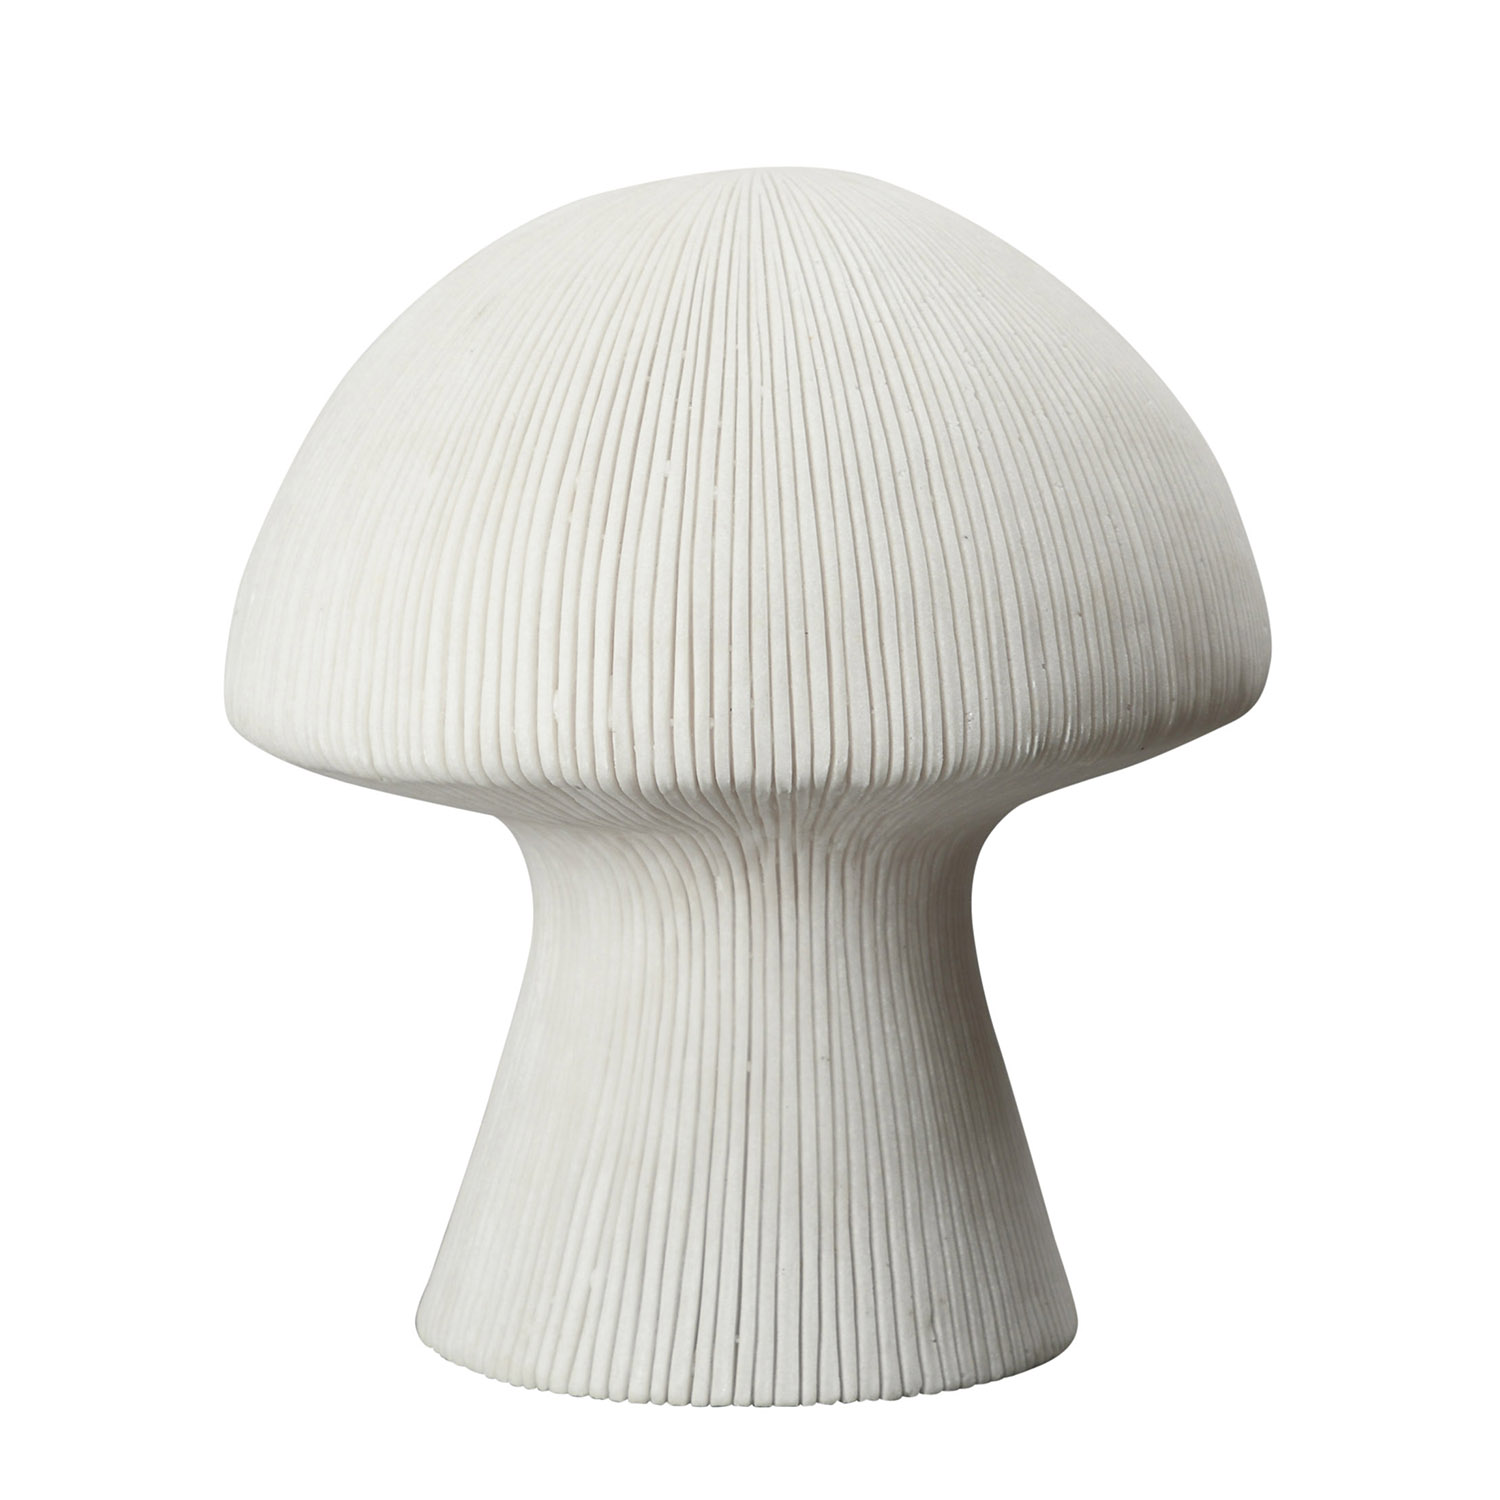 Mushroom Table Lamp 27x31 cm, White - ByON @ RoyalDesign